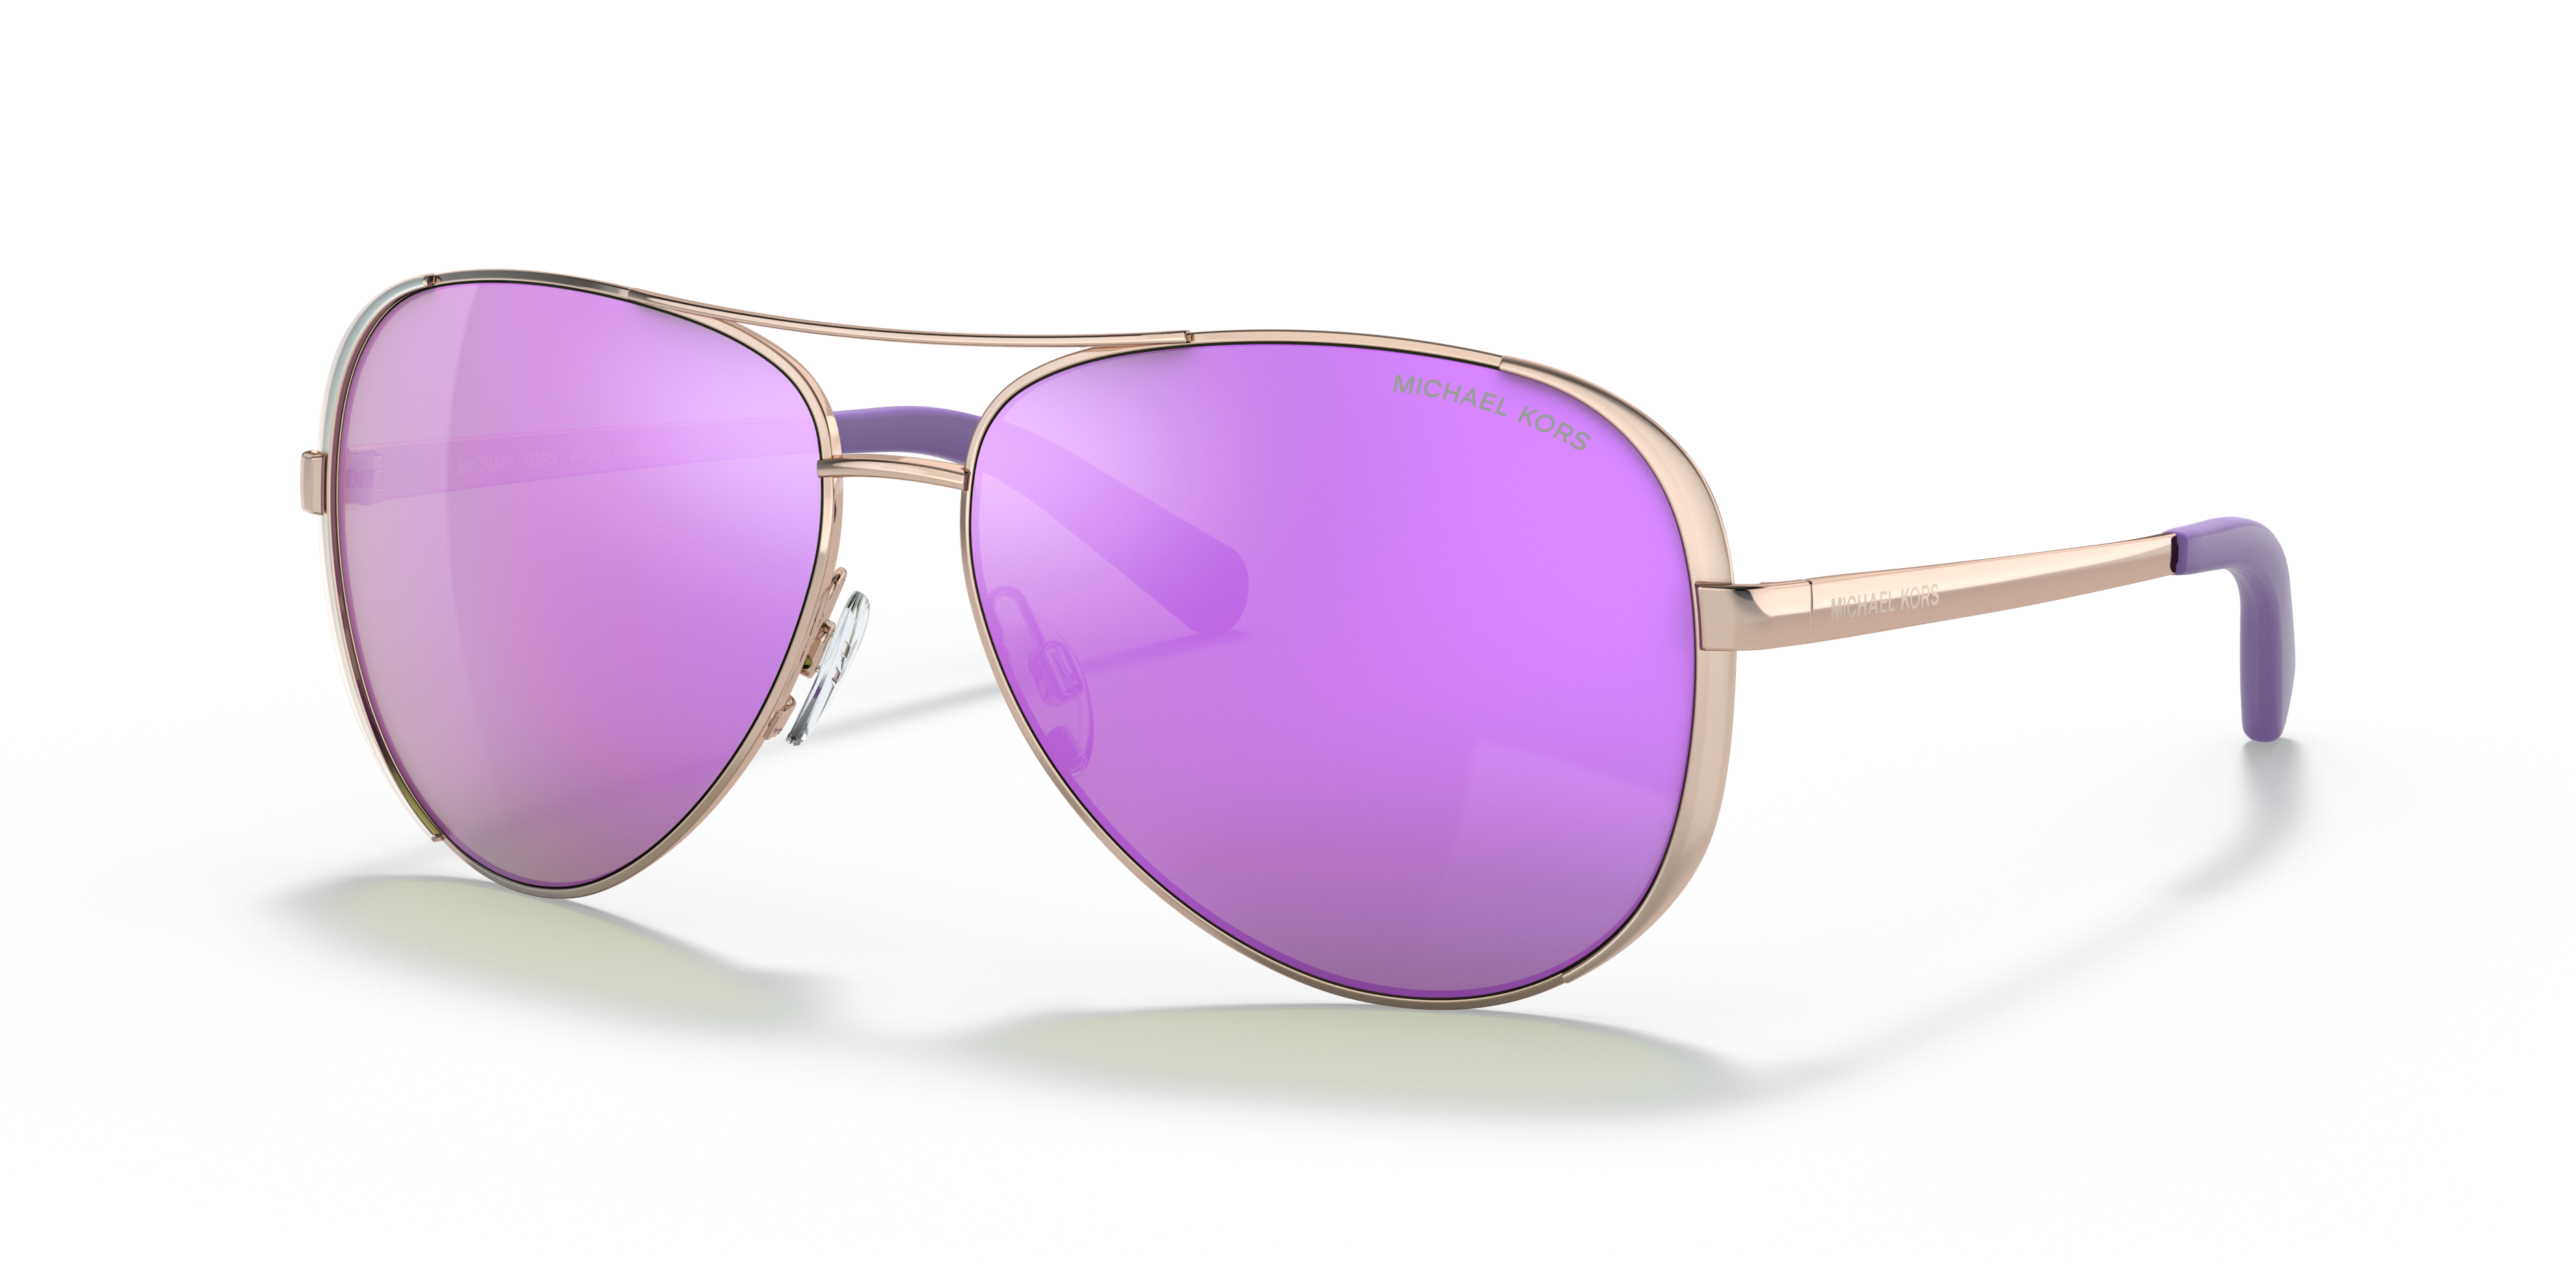 Buy Michael Kors Designer Sunglasses Online  Vision Express